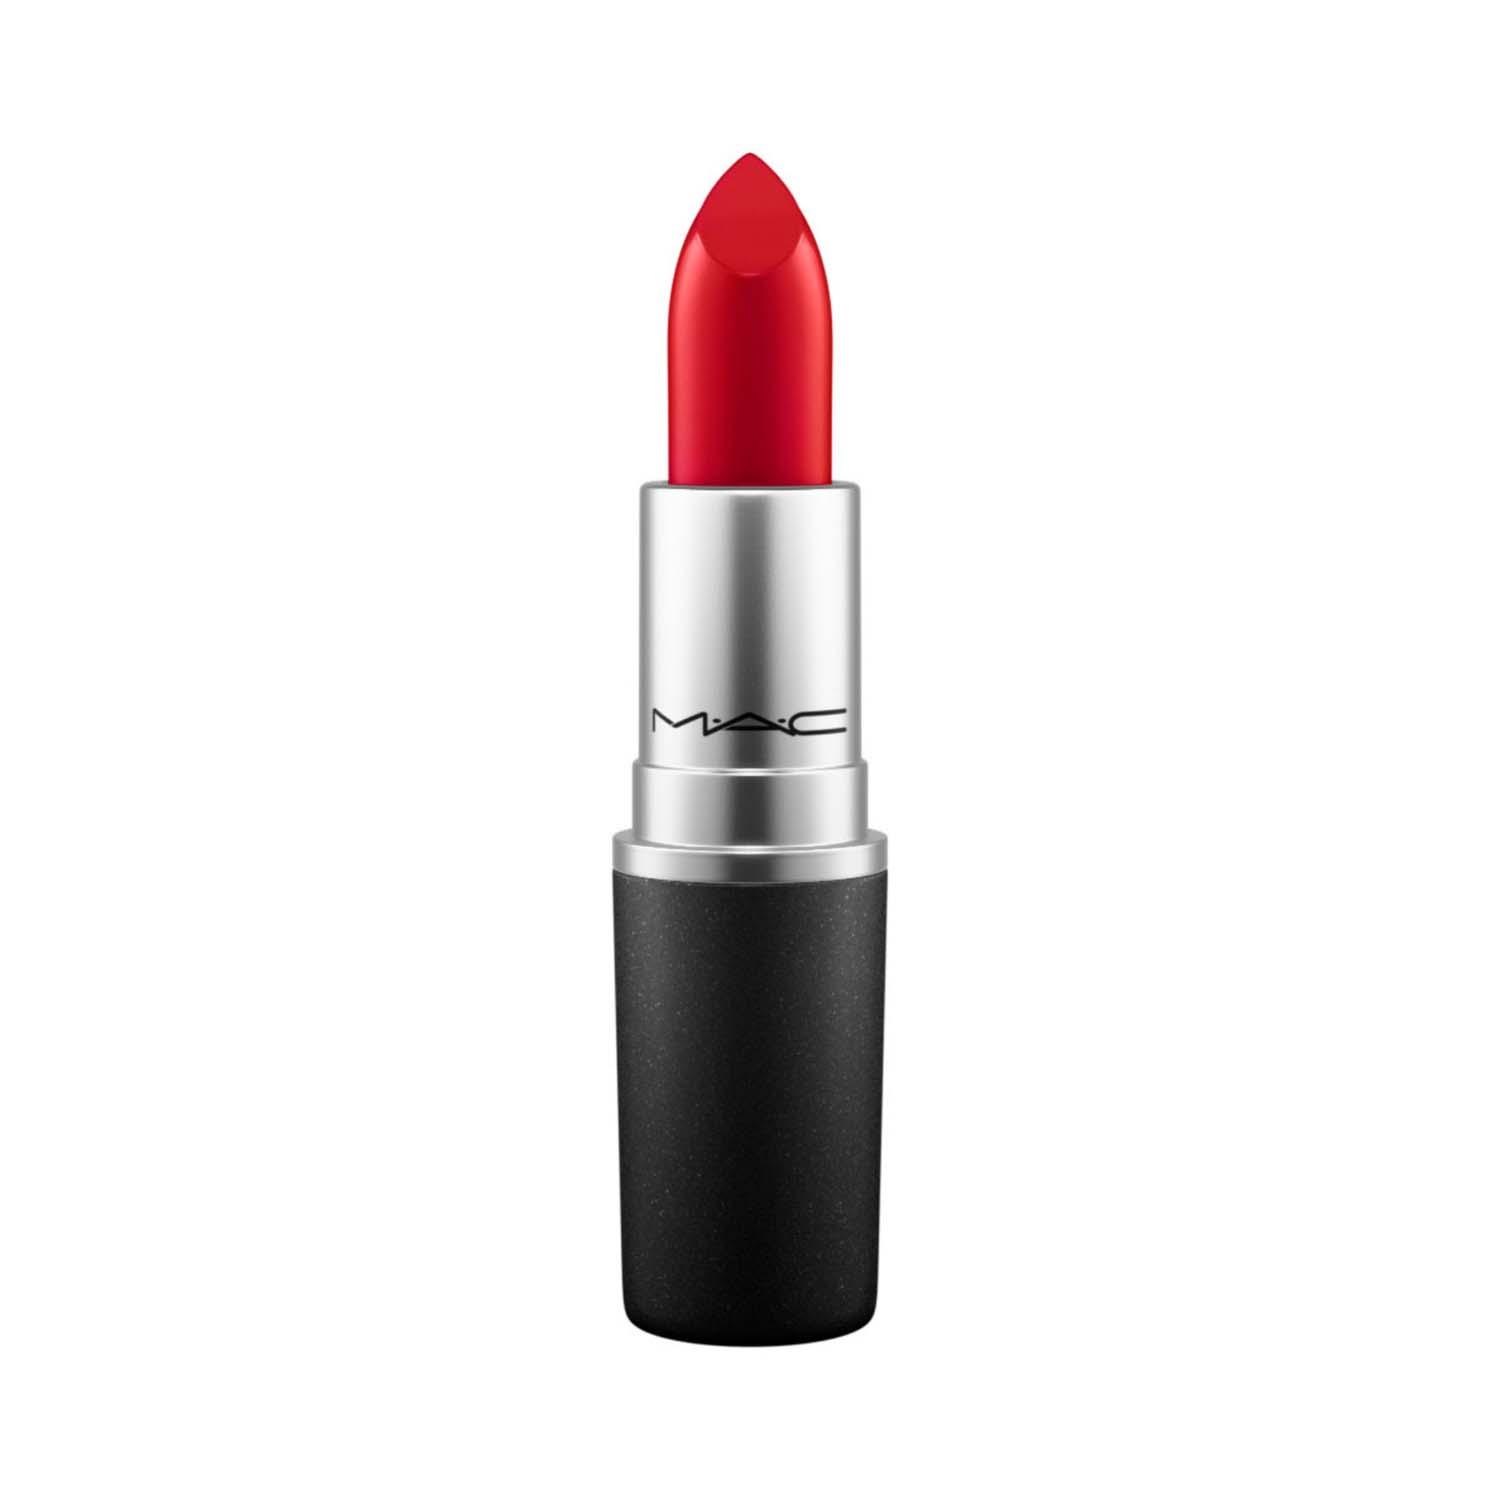 M.A.C | M.A.C Cremesheen Lipstick - Brave Red (3g)